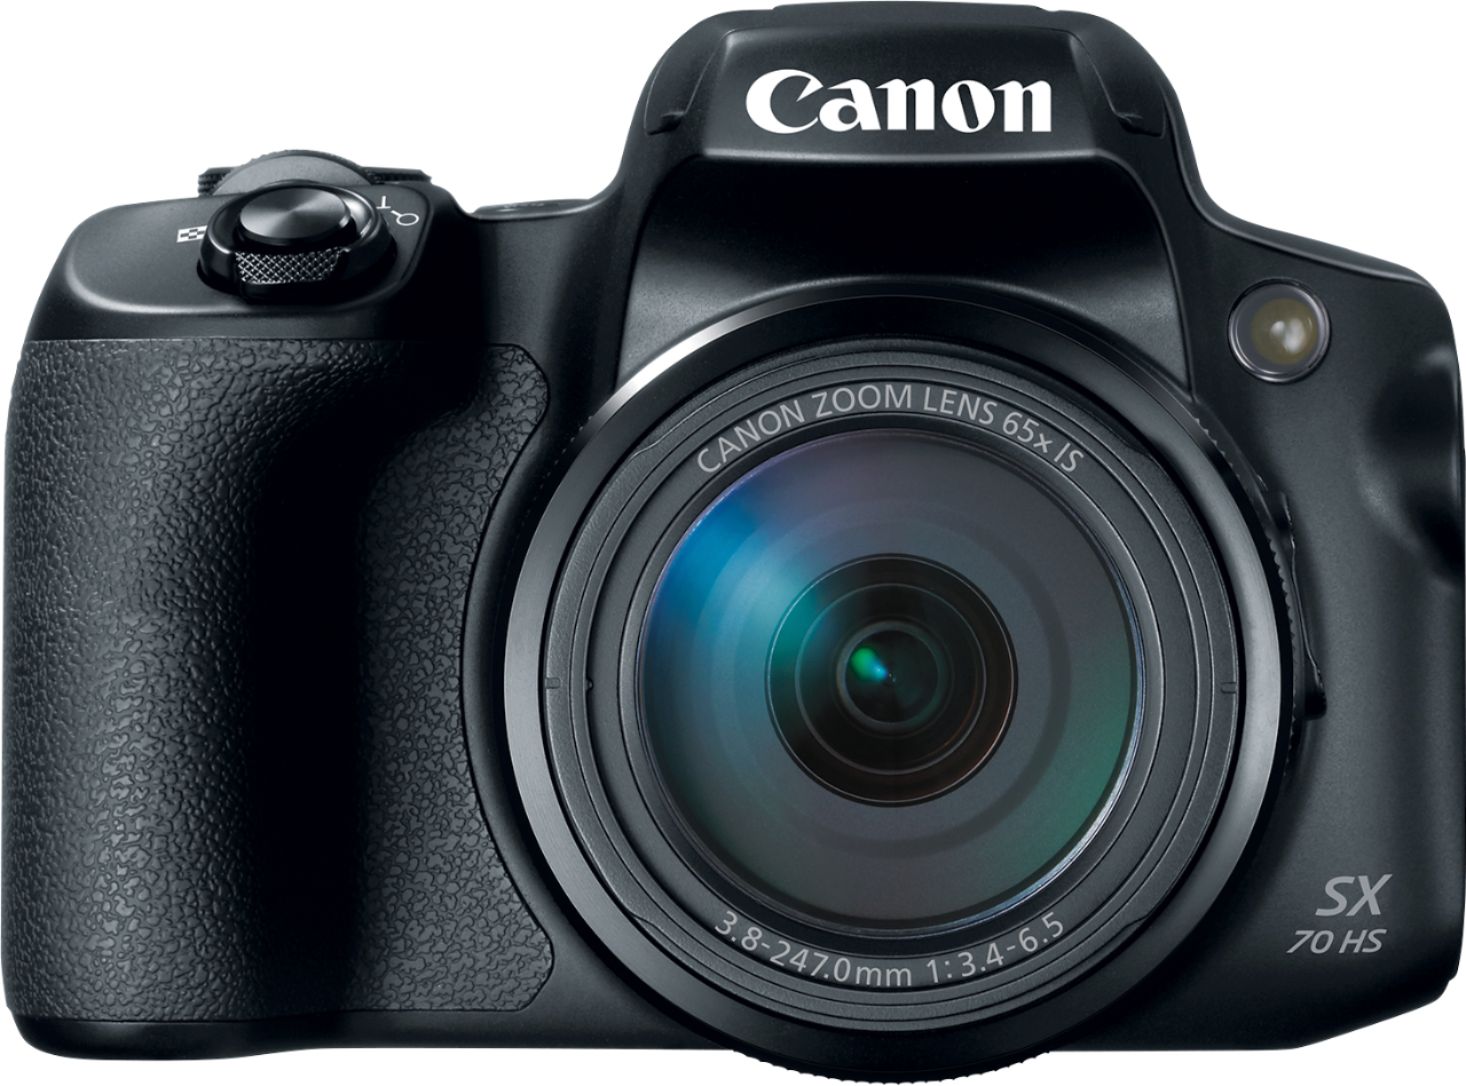 Buy CANON PowerShot SX70 HS Bridge Camera - Black